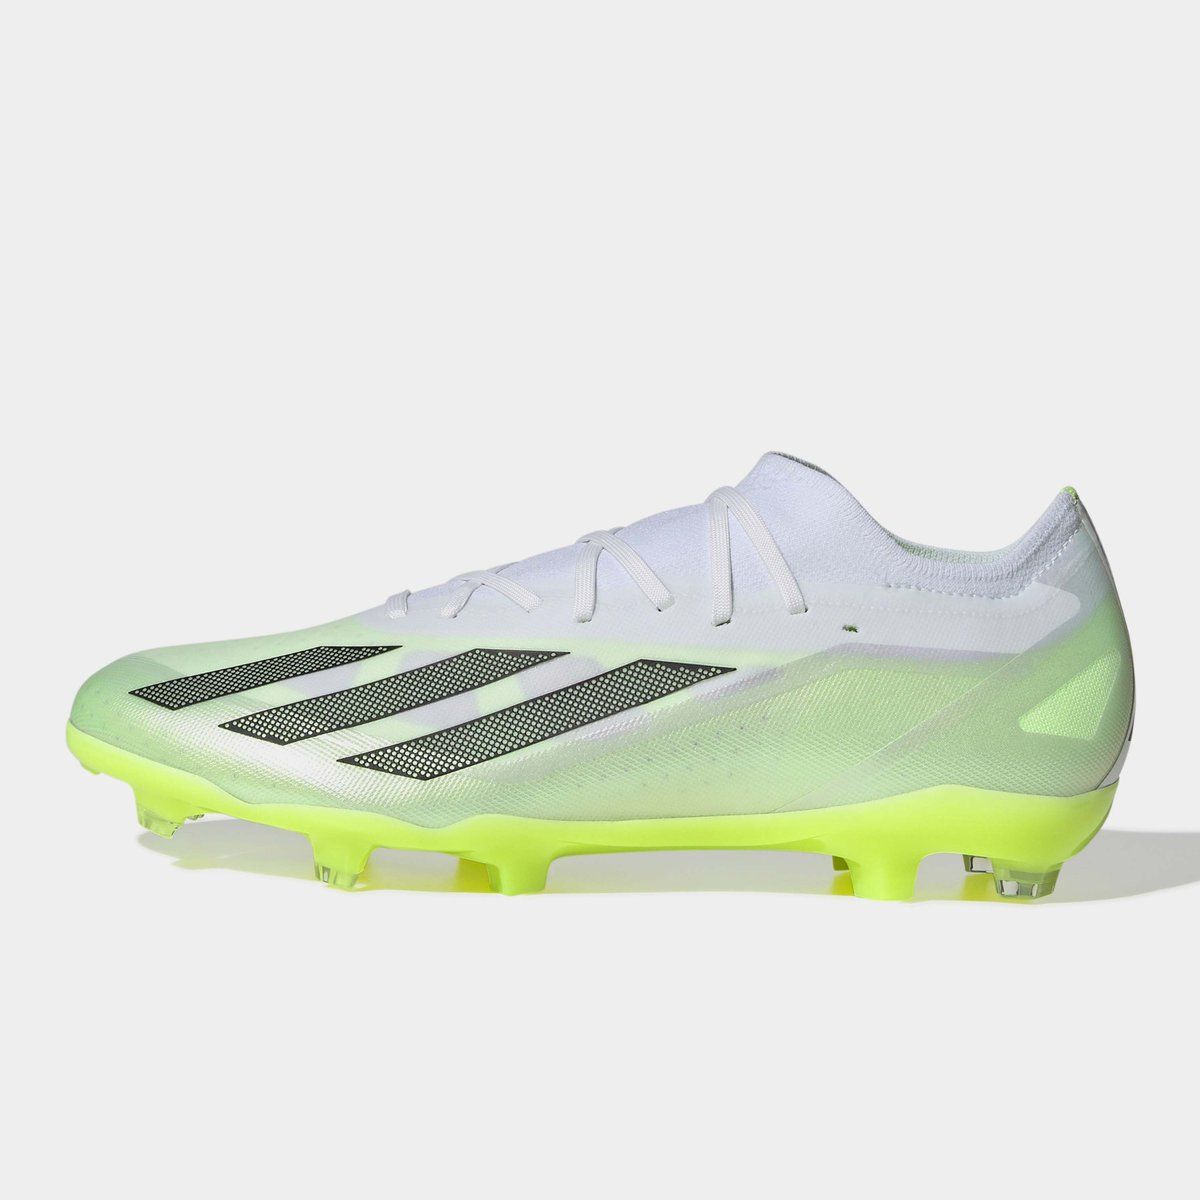 adidas Football Boots - Lovell Soccer